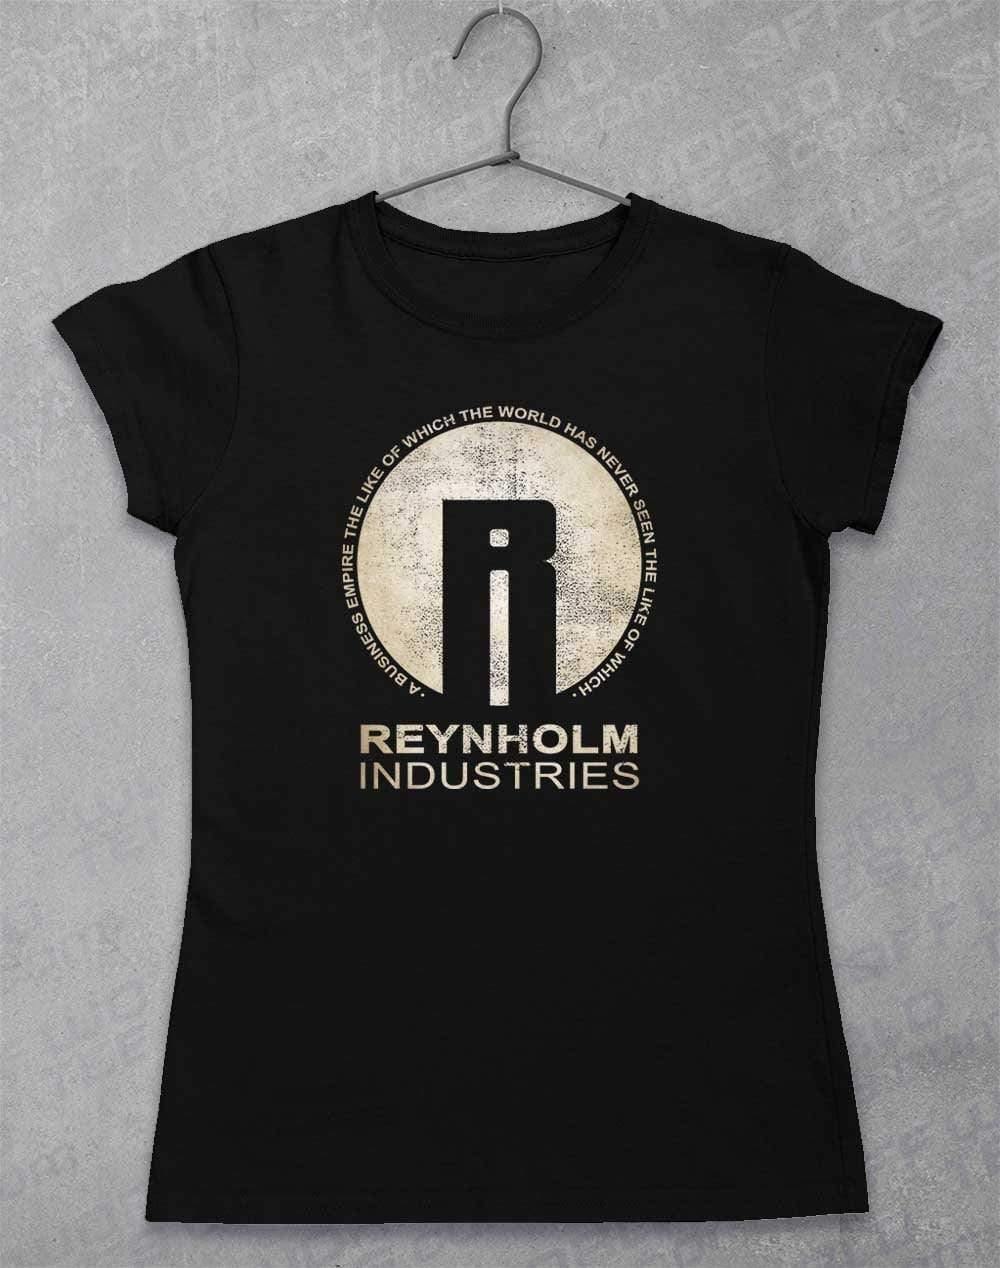 Reynholm Industries Women's T-Shirt 8-10 / Black  - Off World Tees